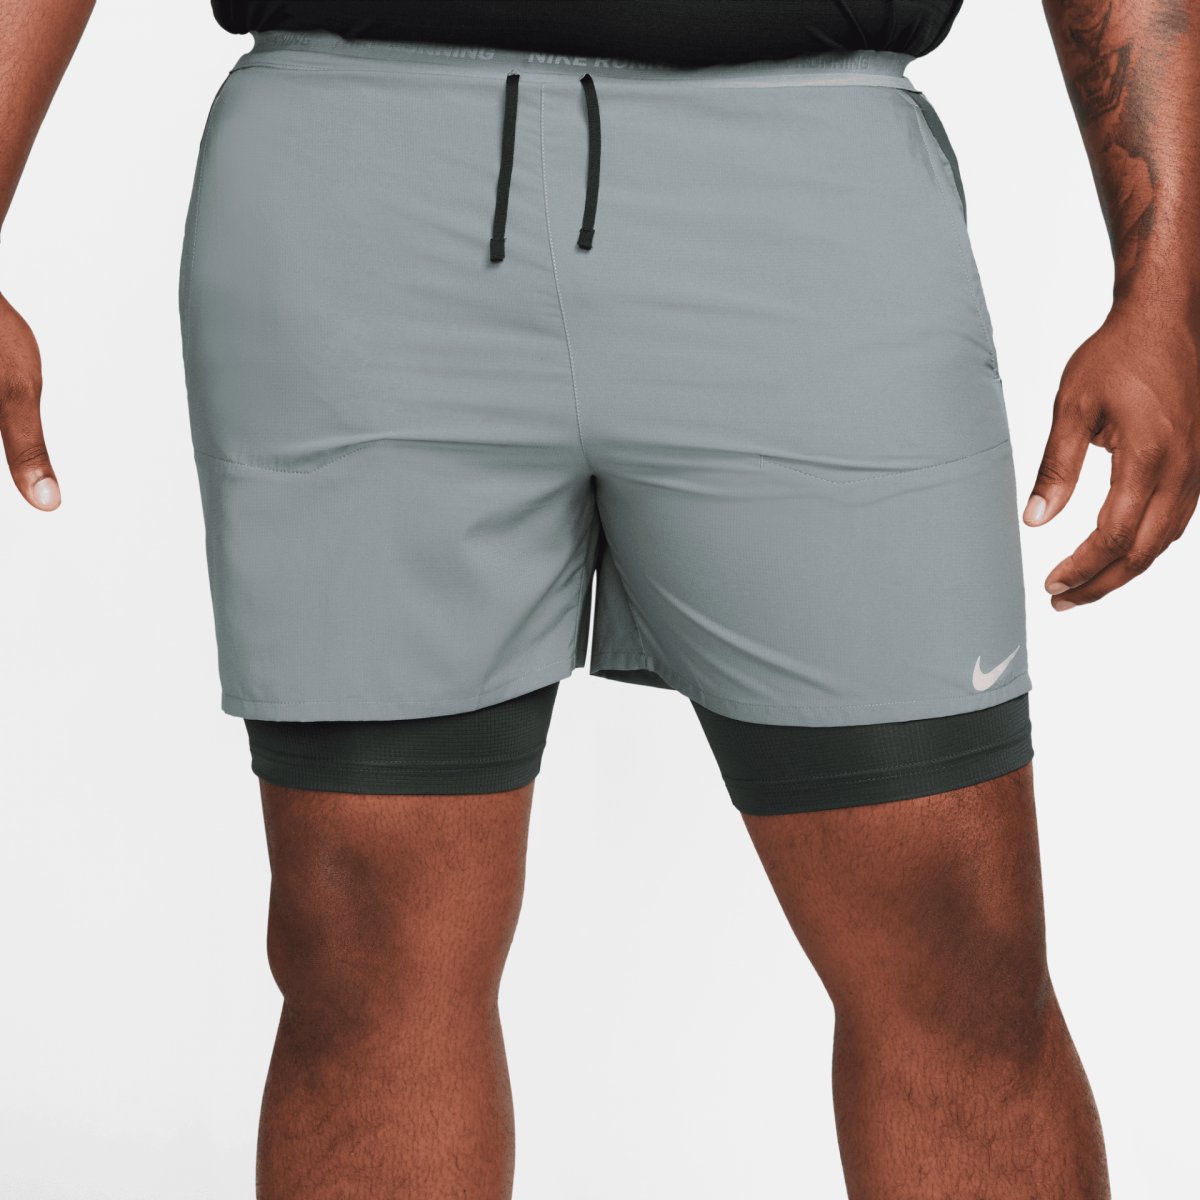 Nike Dri-FIT Stride Grey Men's running shorts - Shorts - Clothes - Men ...